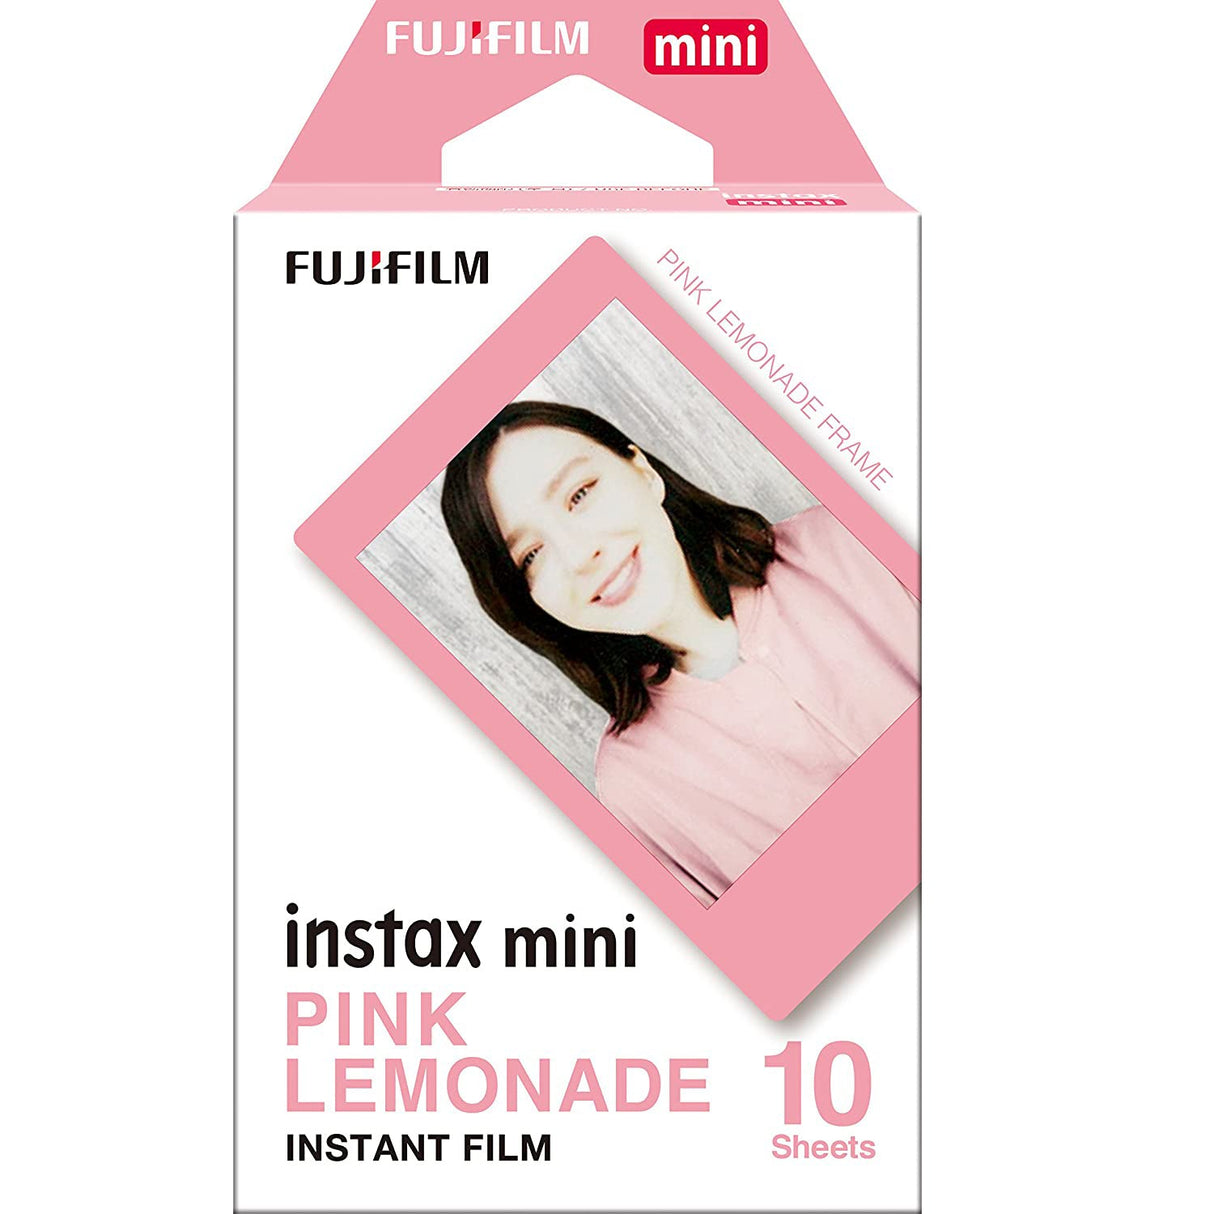 Fujifilm Instax Mini 10X1 pink lemonade Instant Film with 96-sheet Album for mini film (Charcoal gray)